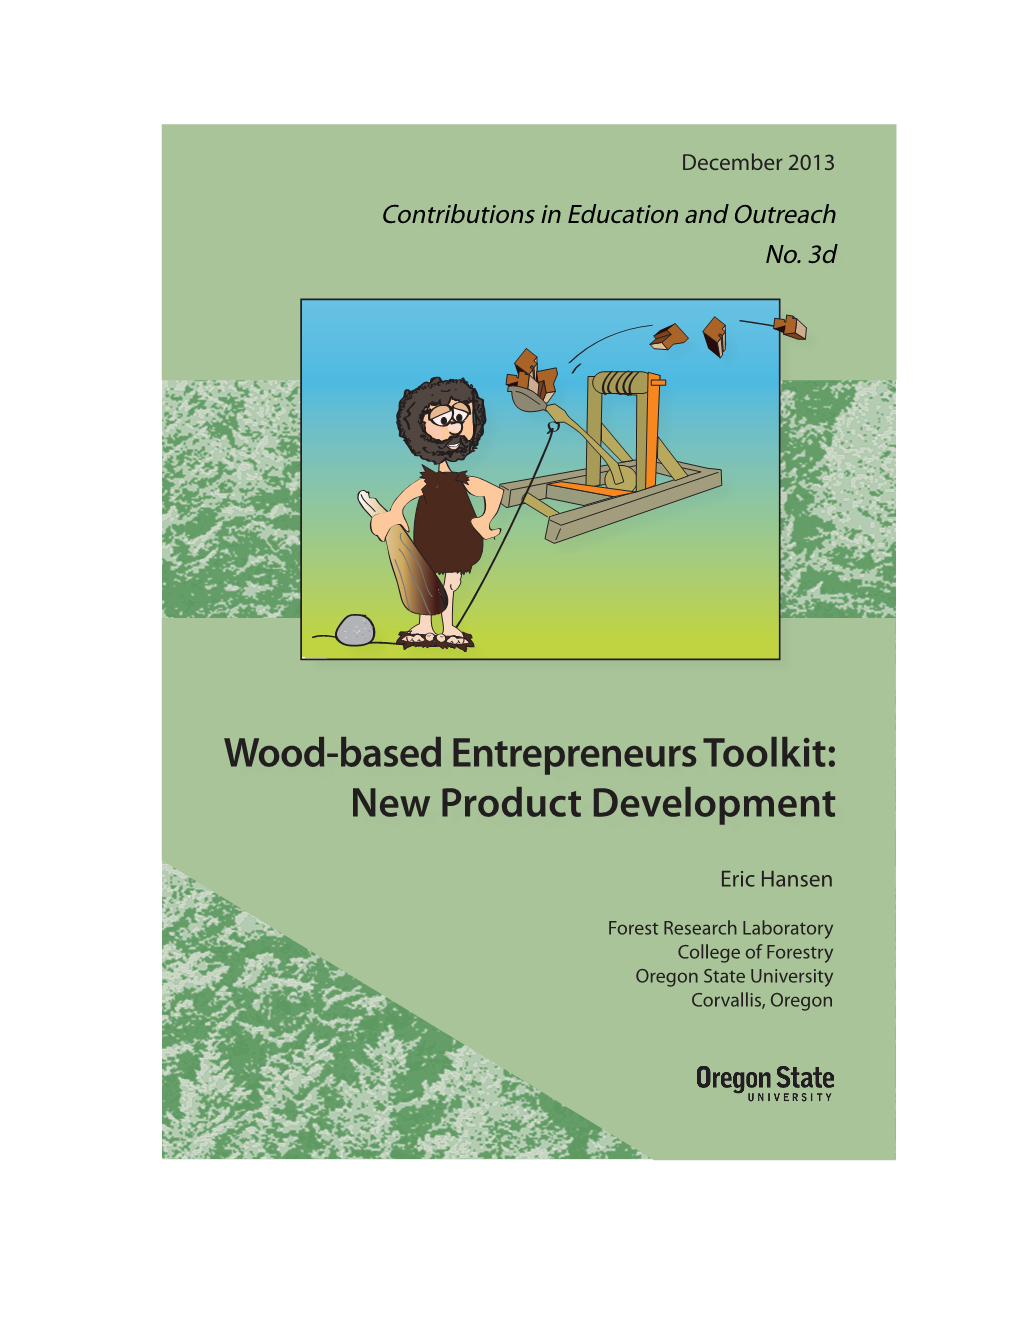 Wood-Based Entrepreneurs Toolkit: New Product Development